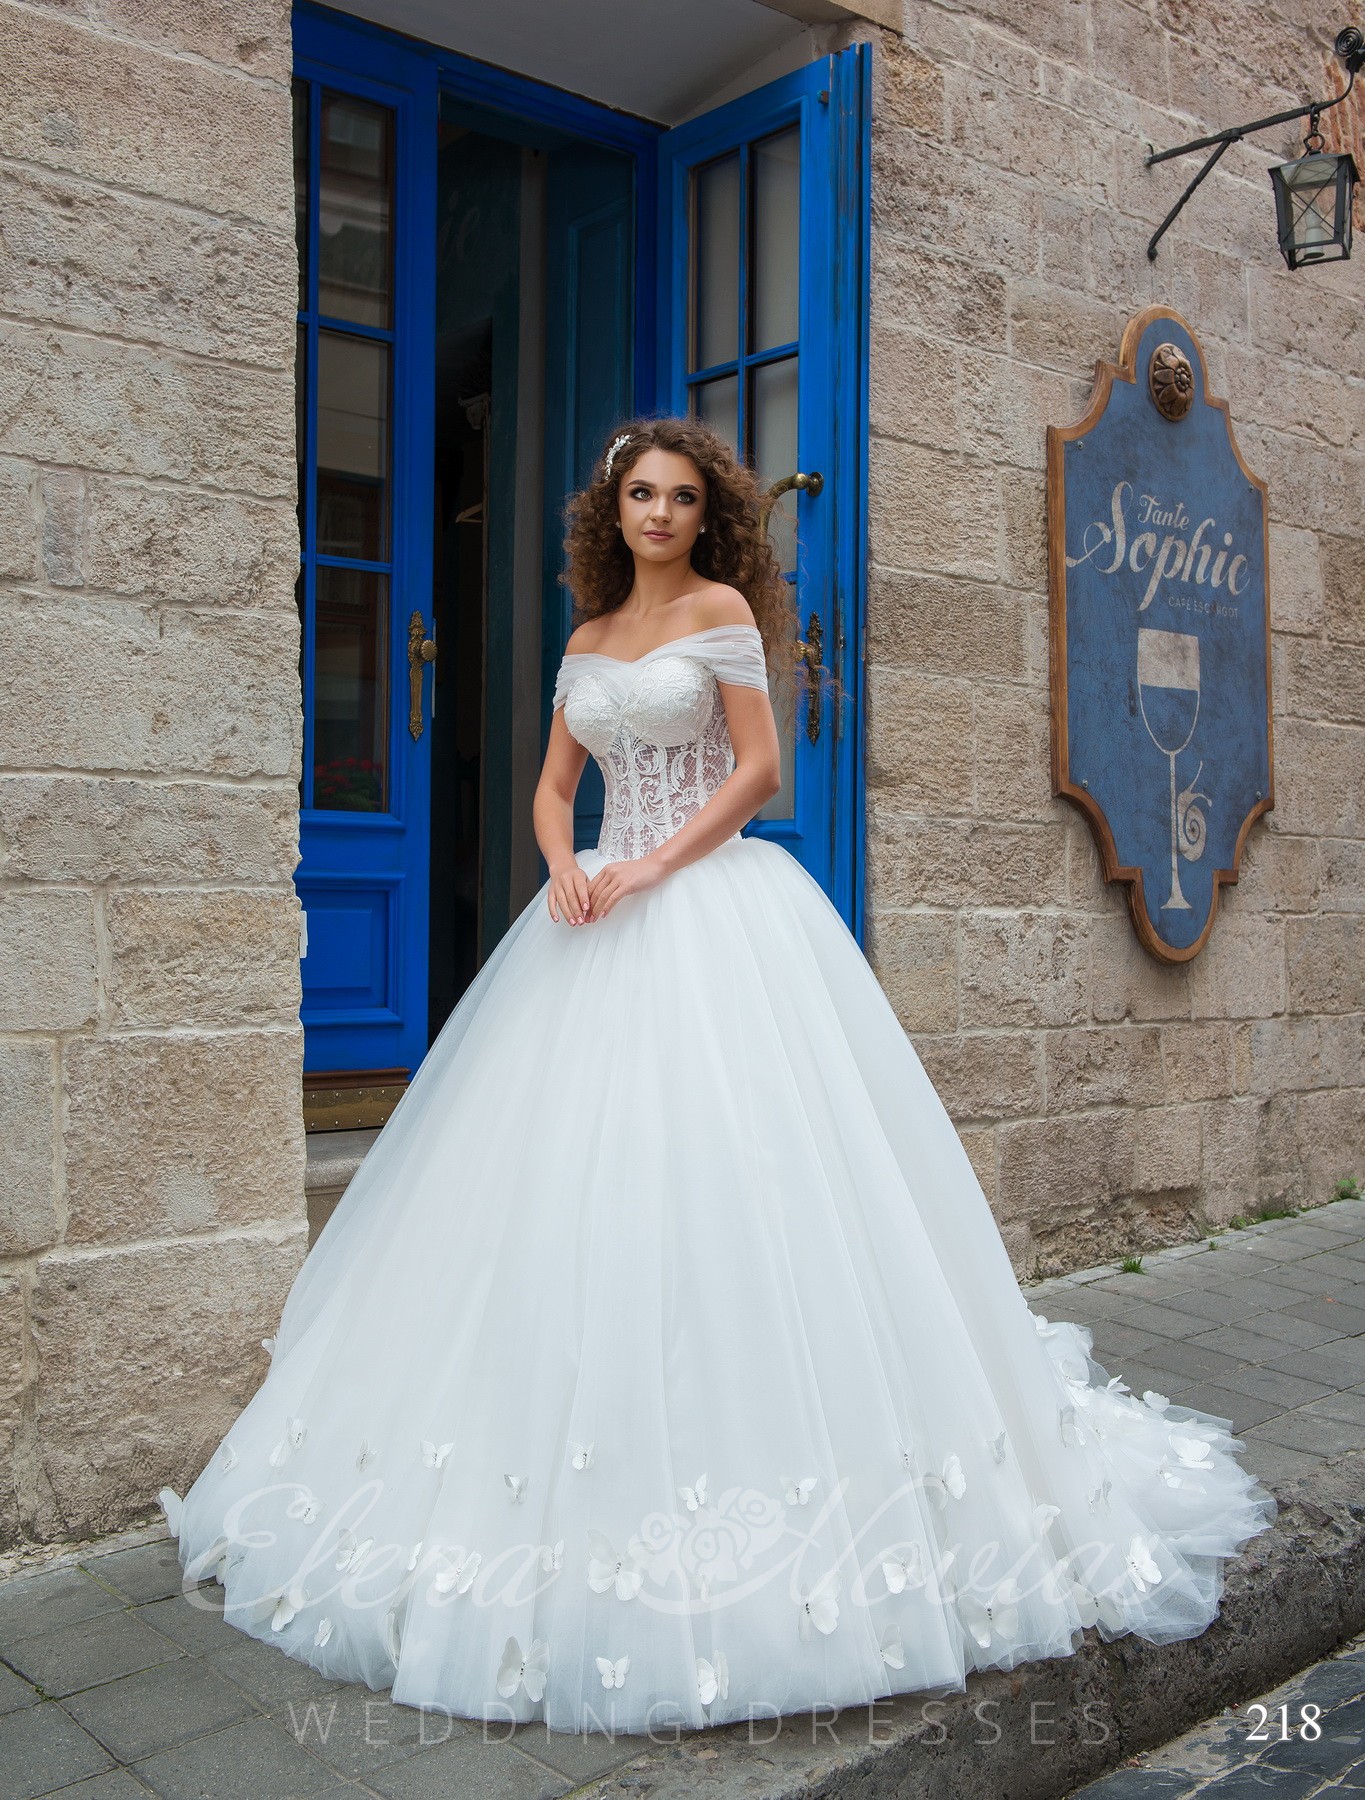 "Princess" style wedding dress model 218